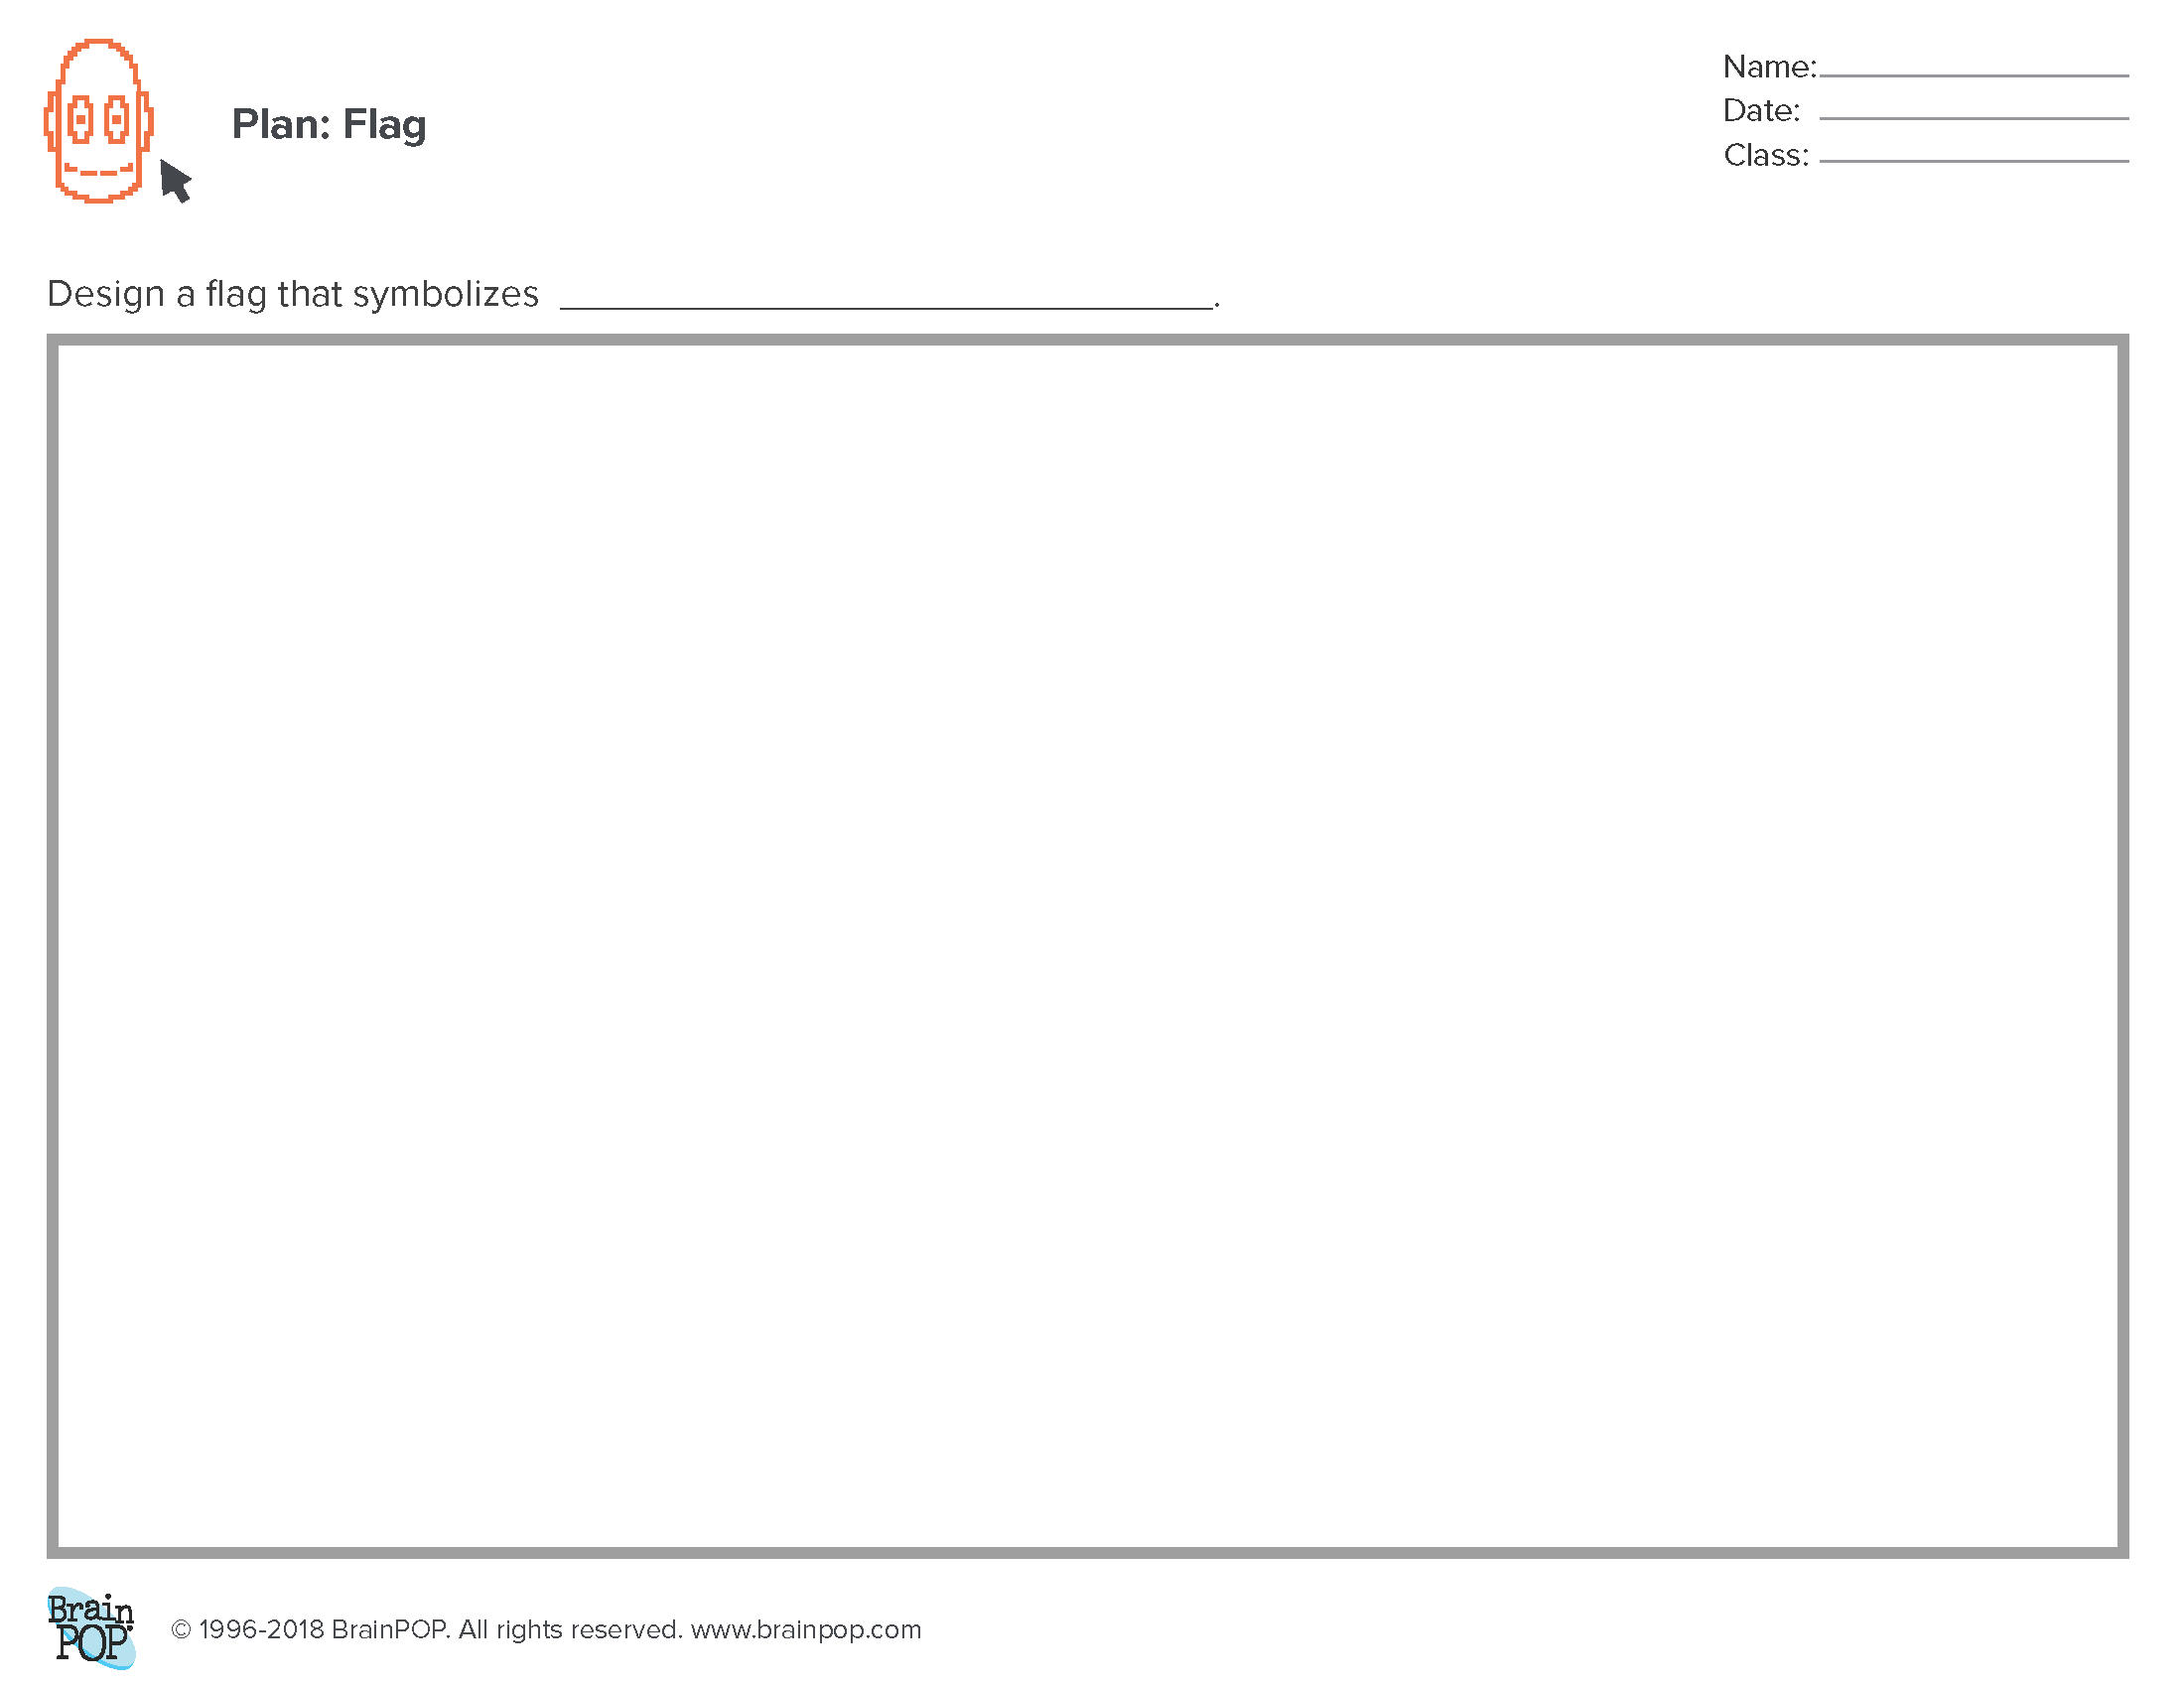 Planning Sheet: Flag